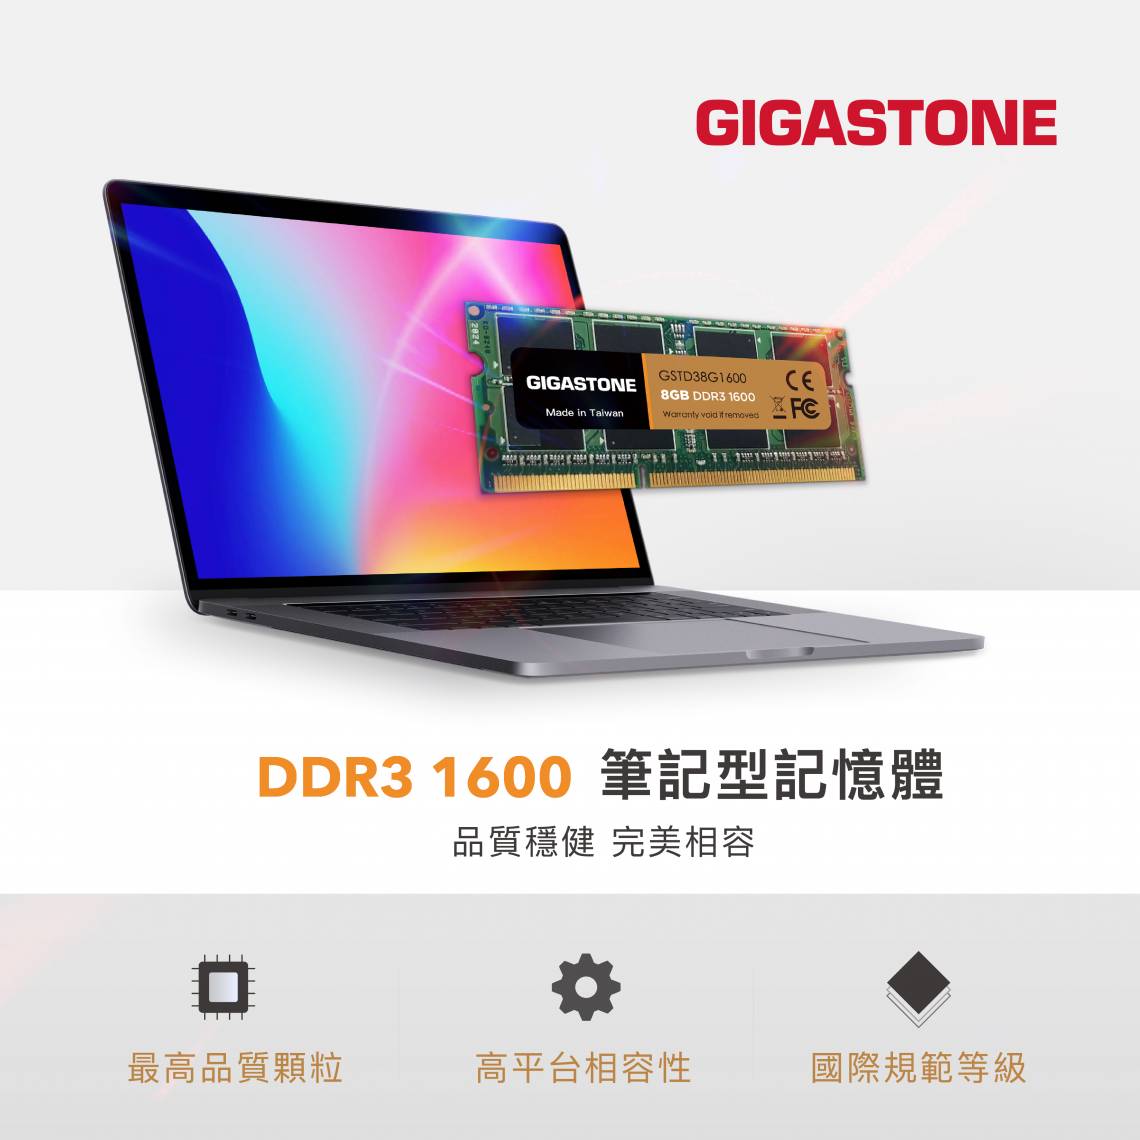 DDR3 SODIMM_01.jpg